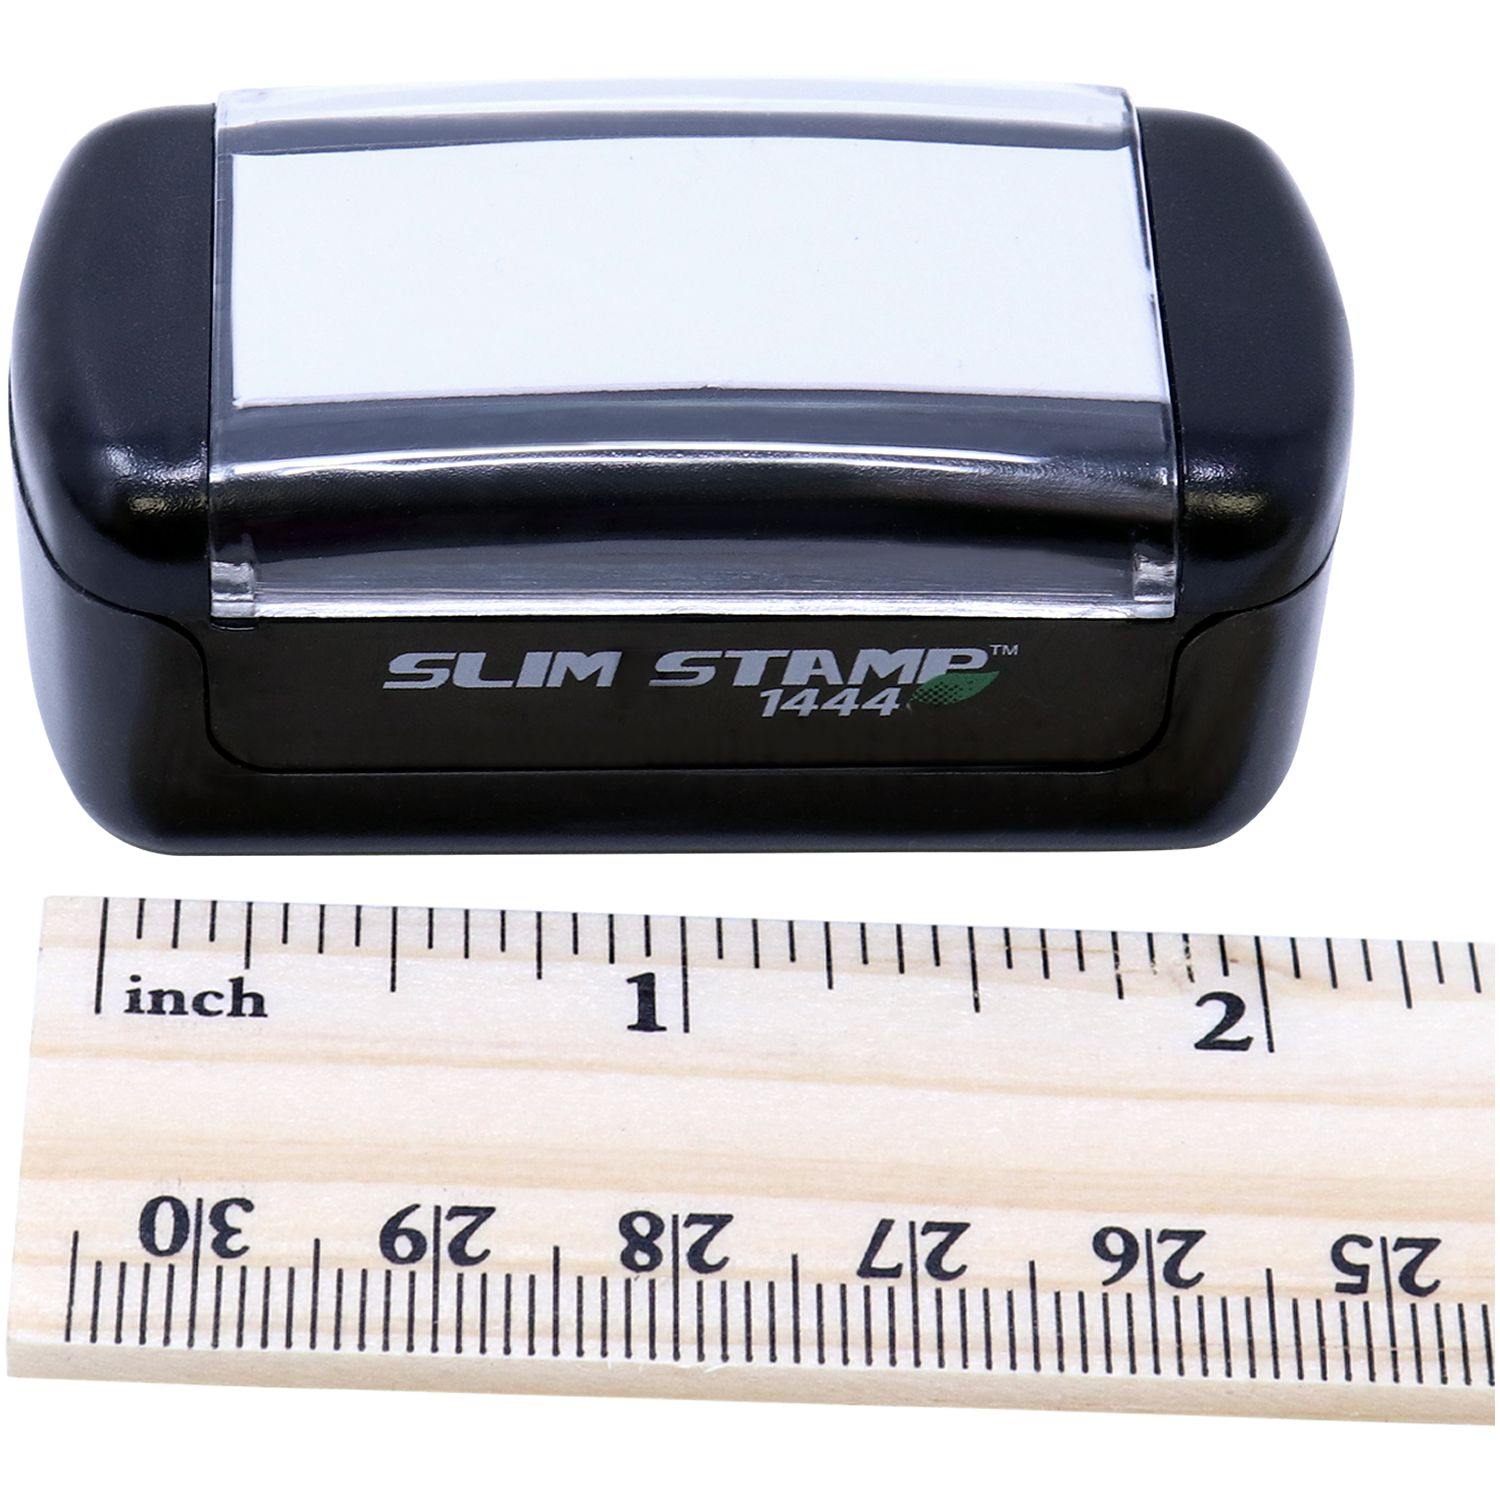 Measurement Slim Pre-Inked This belongs to ... Stamp with Ruler